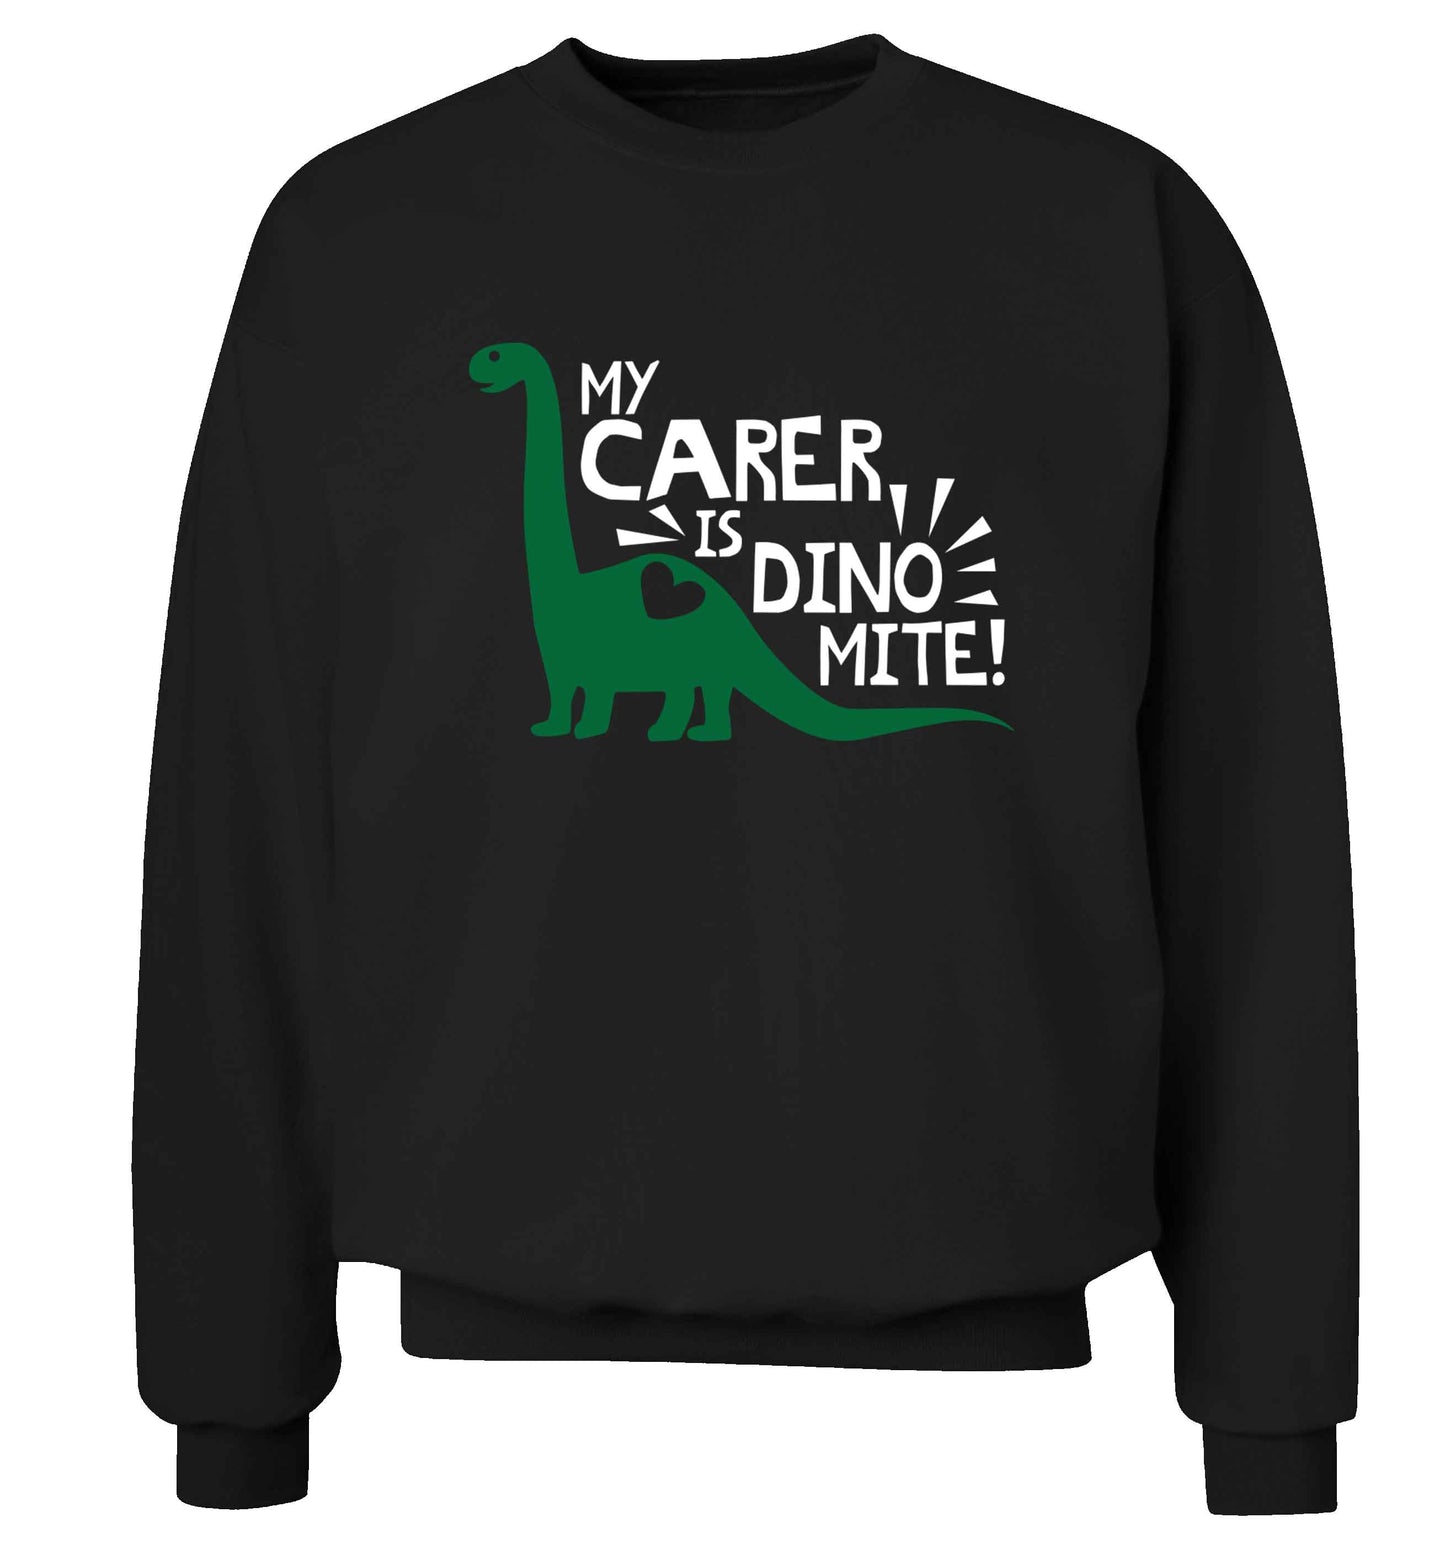 My carer is dinomite! Adult's unisex black Sweater 2XL